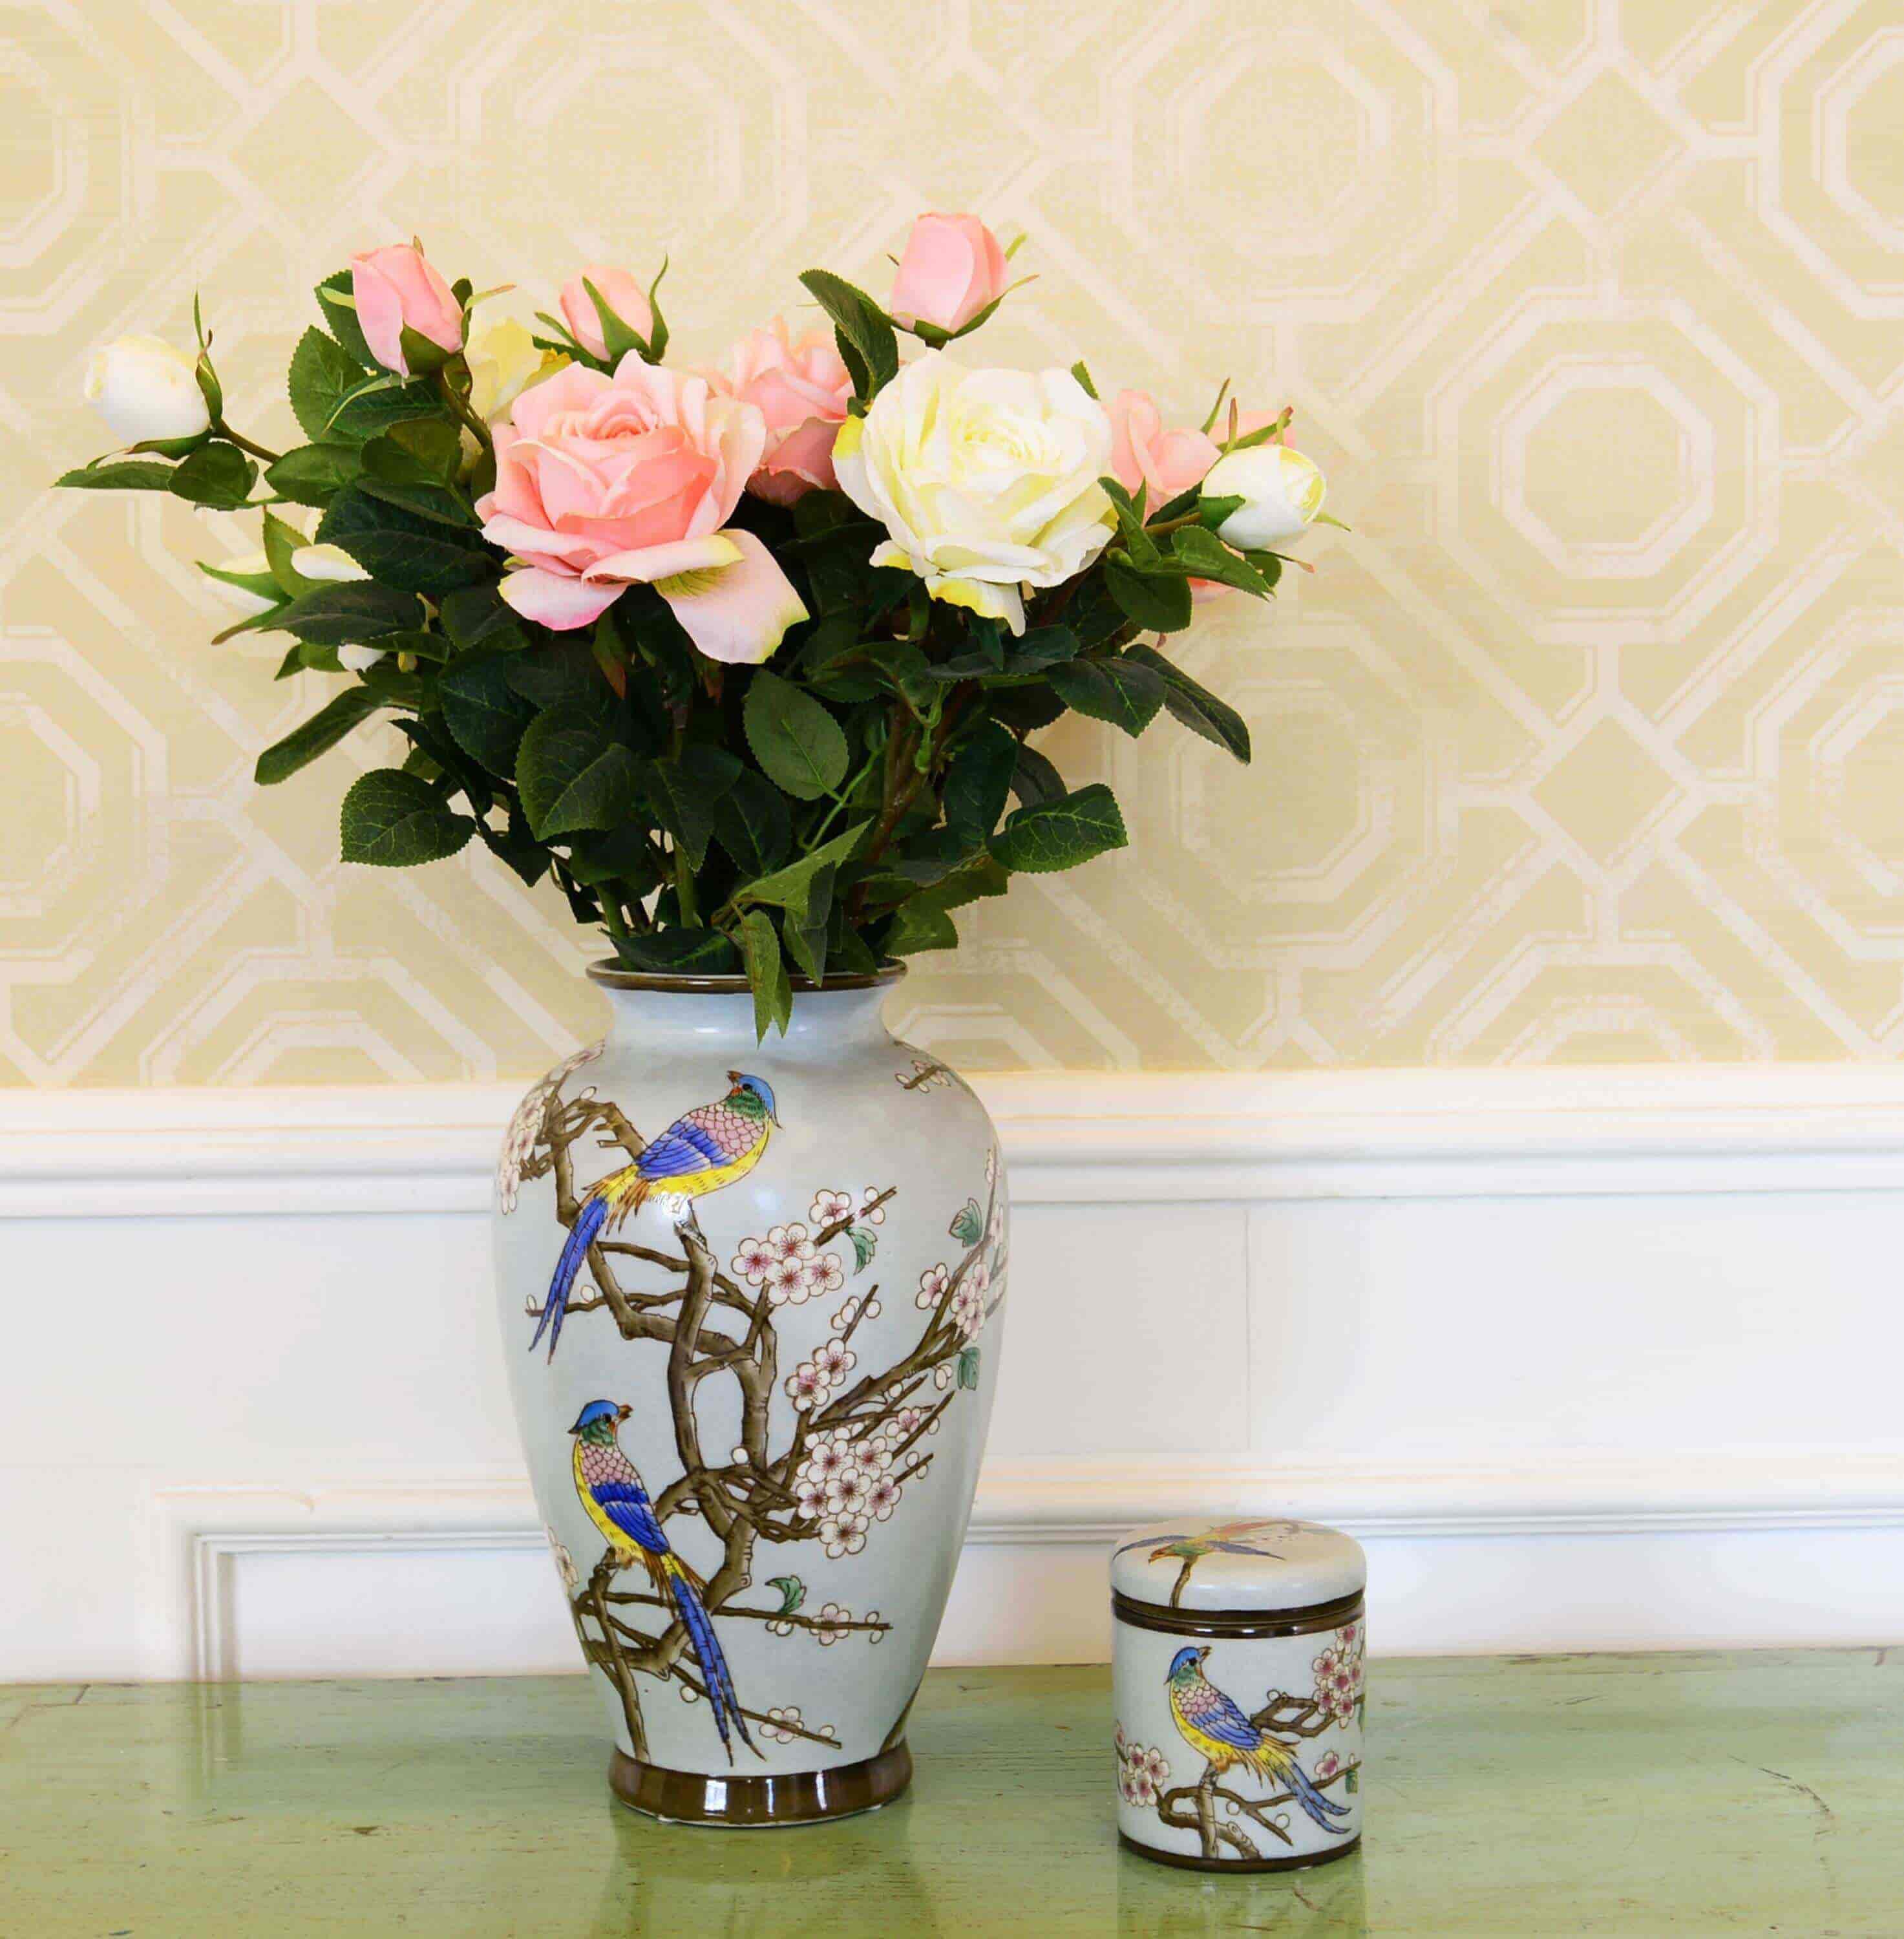 Flower Vase Design - Photos All Recommendation